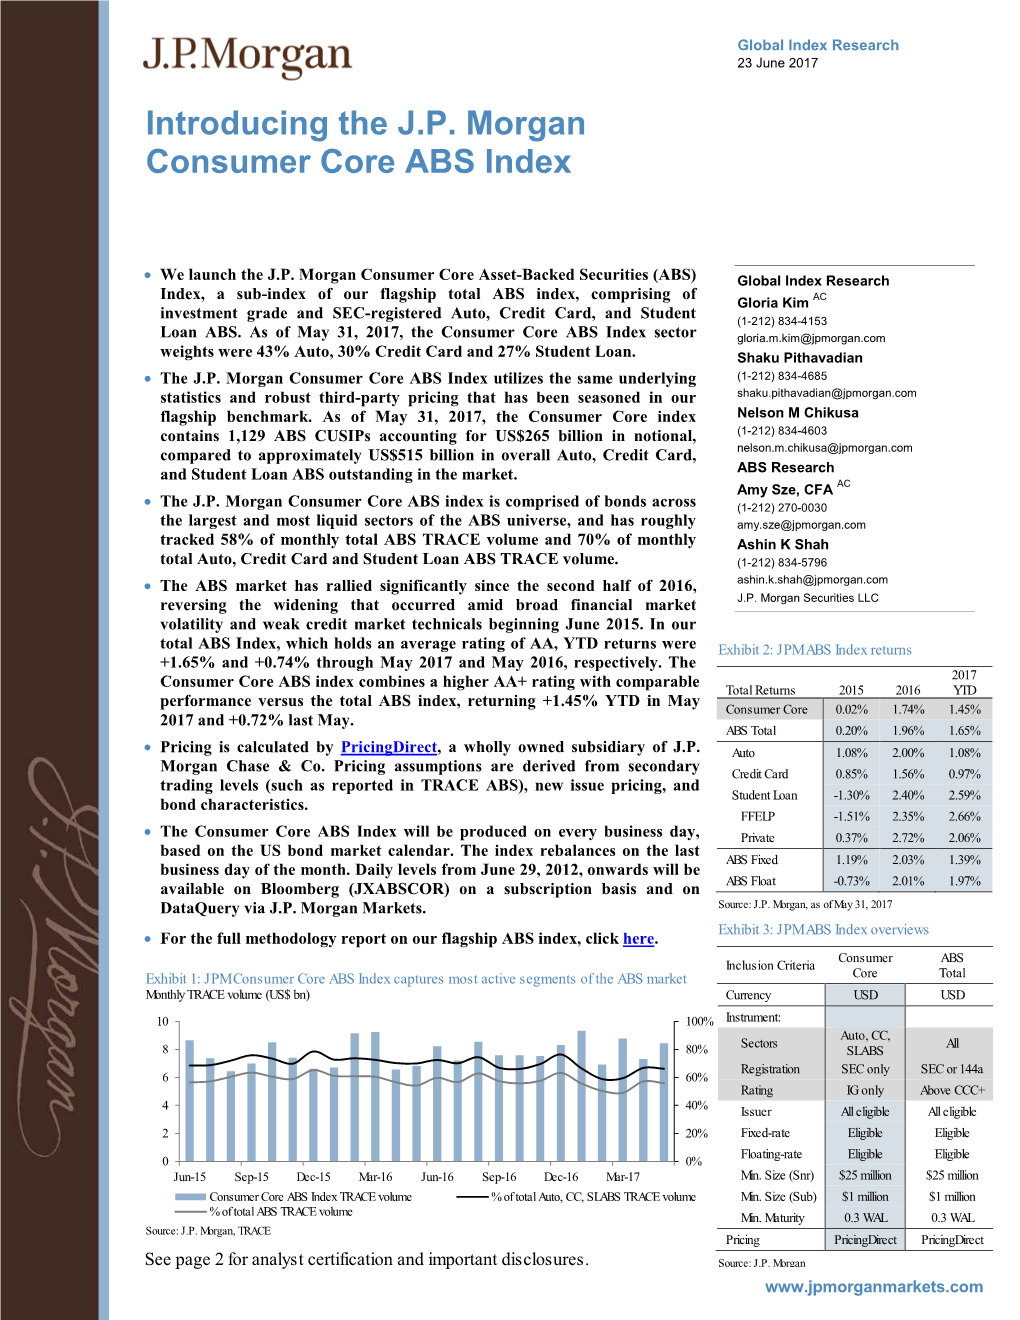 Introducing the J.P. Morgan Consumer Core ABS Index